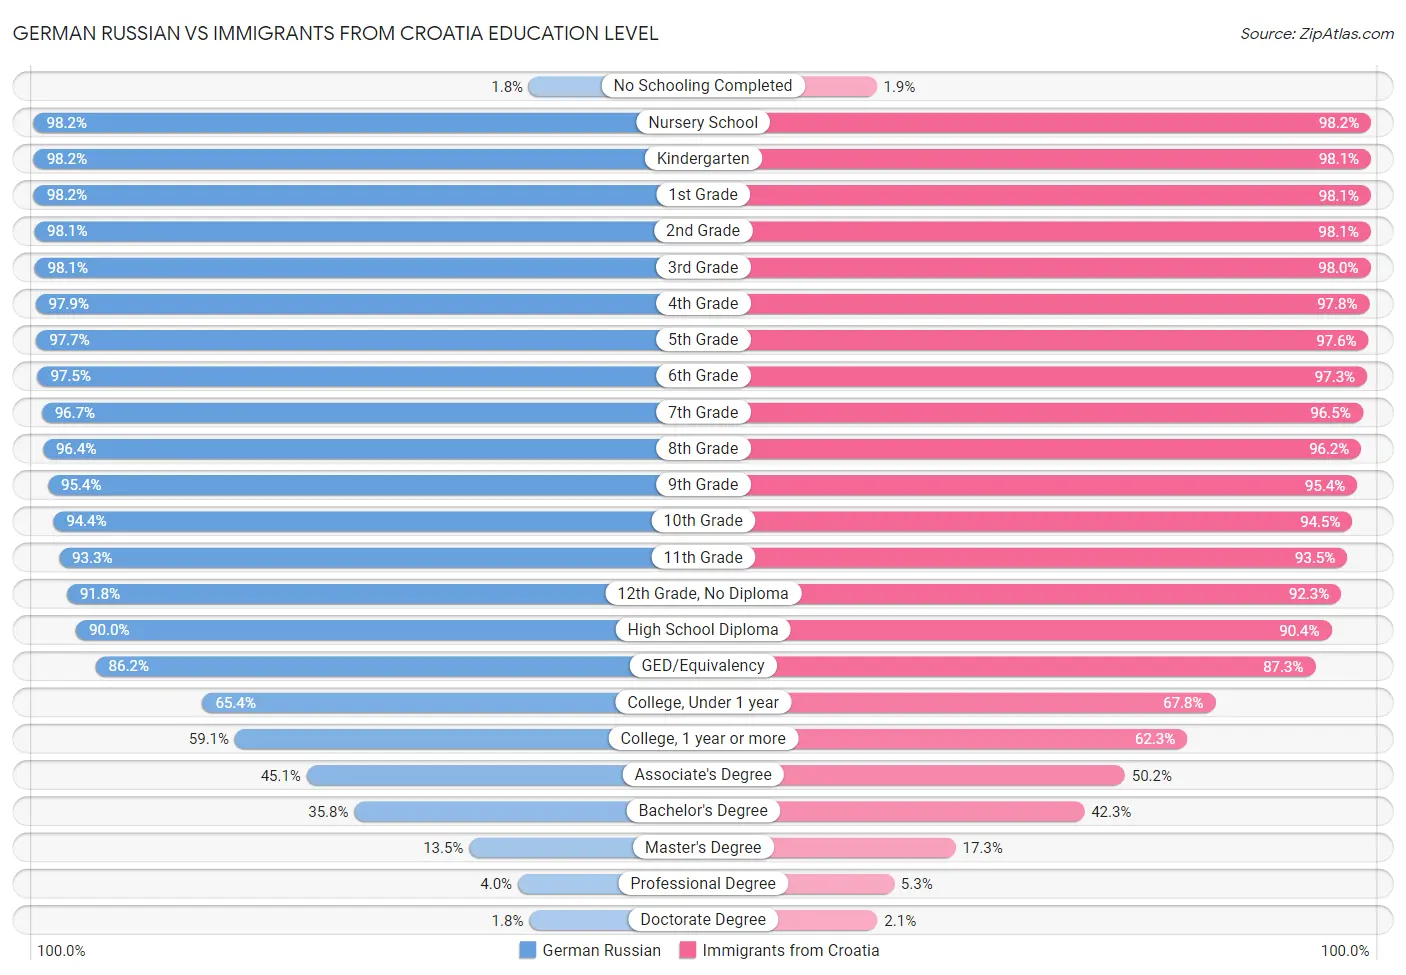 German Russian vs Immigrants from Croatia Education Level